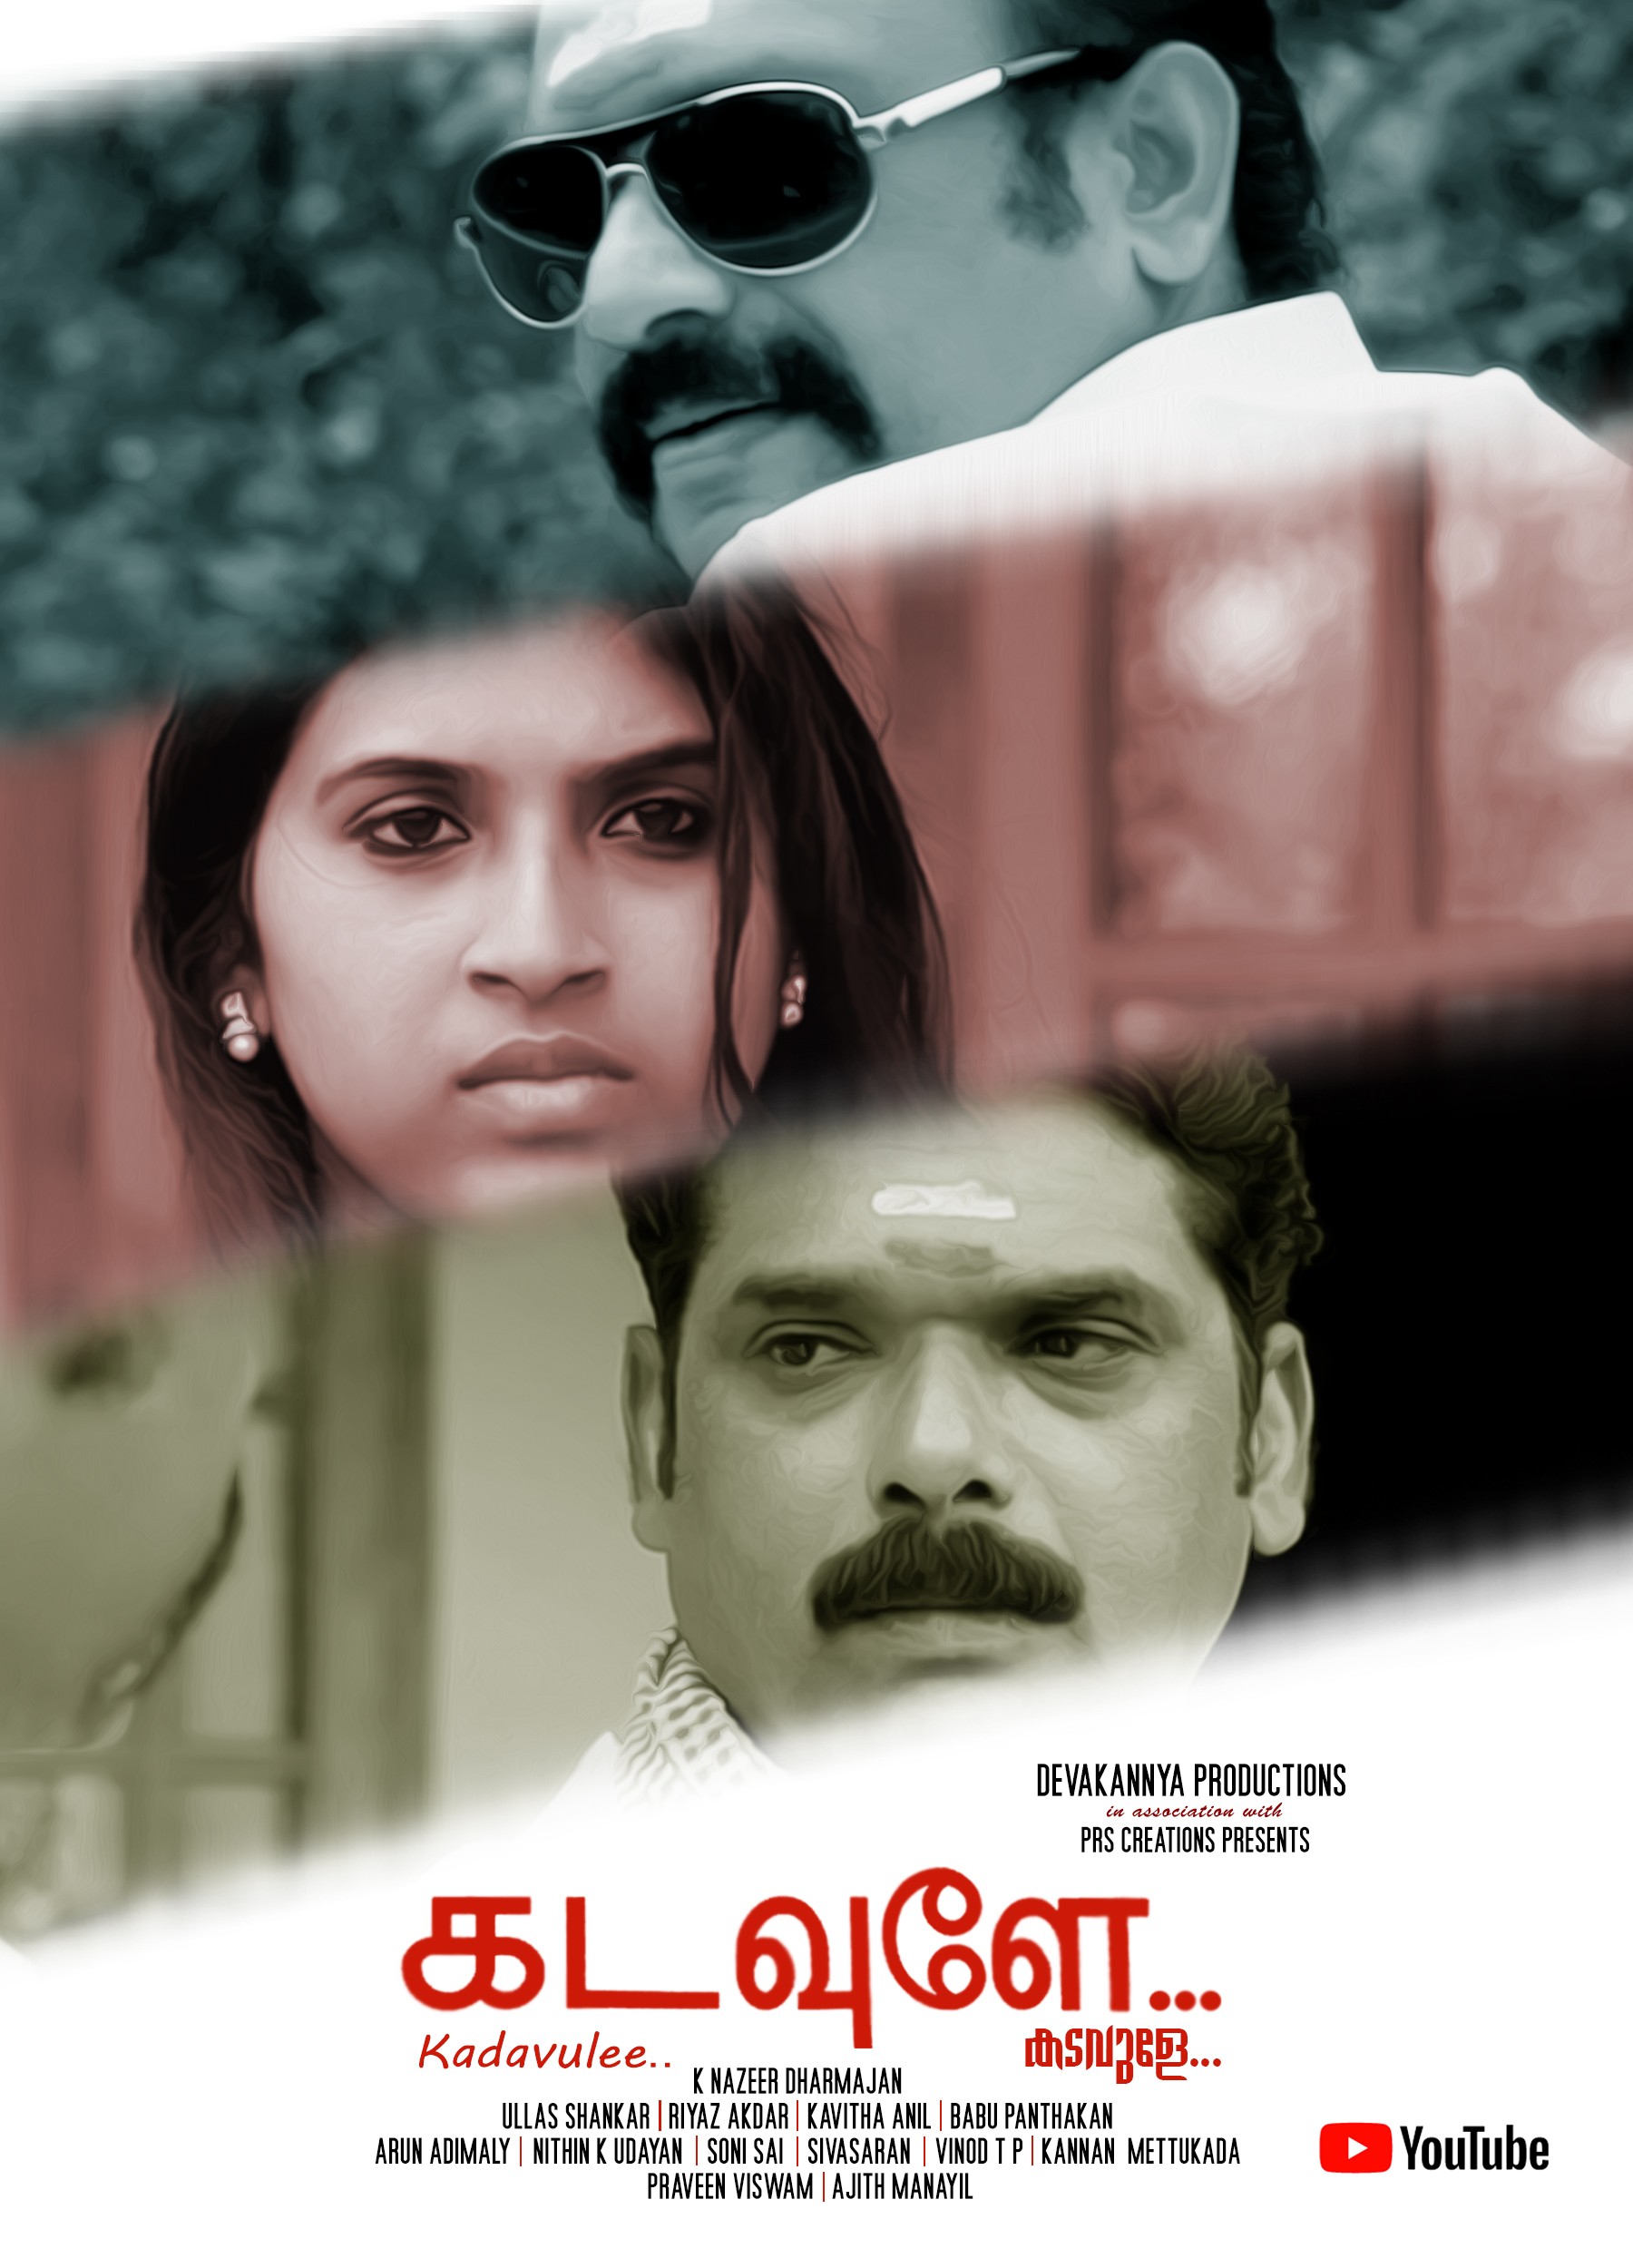 Mega Sized Movie Poster Image for Kadavulee